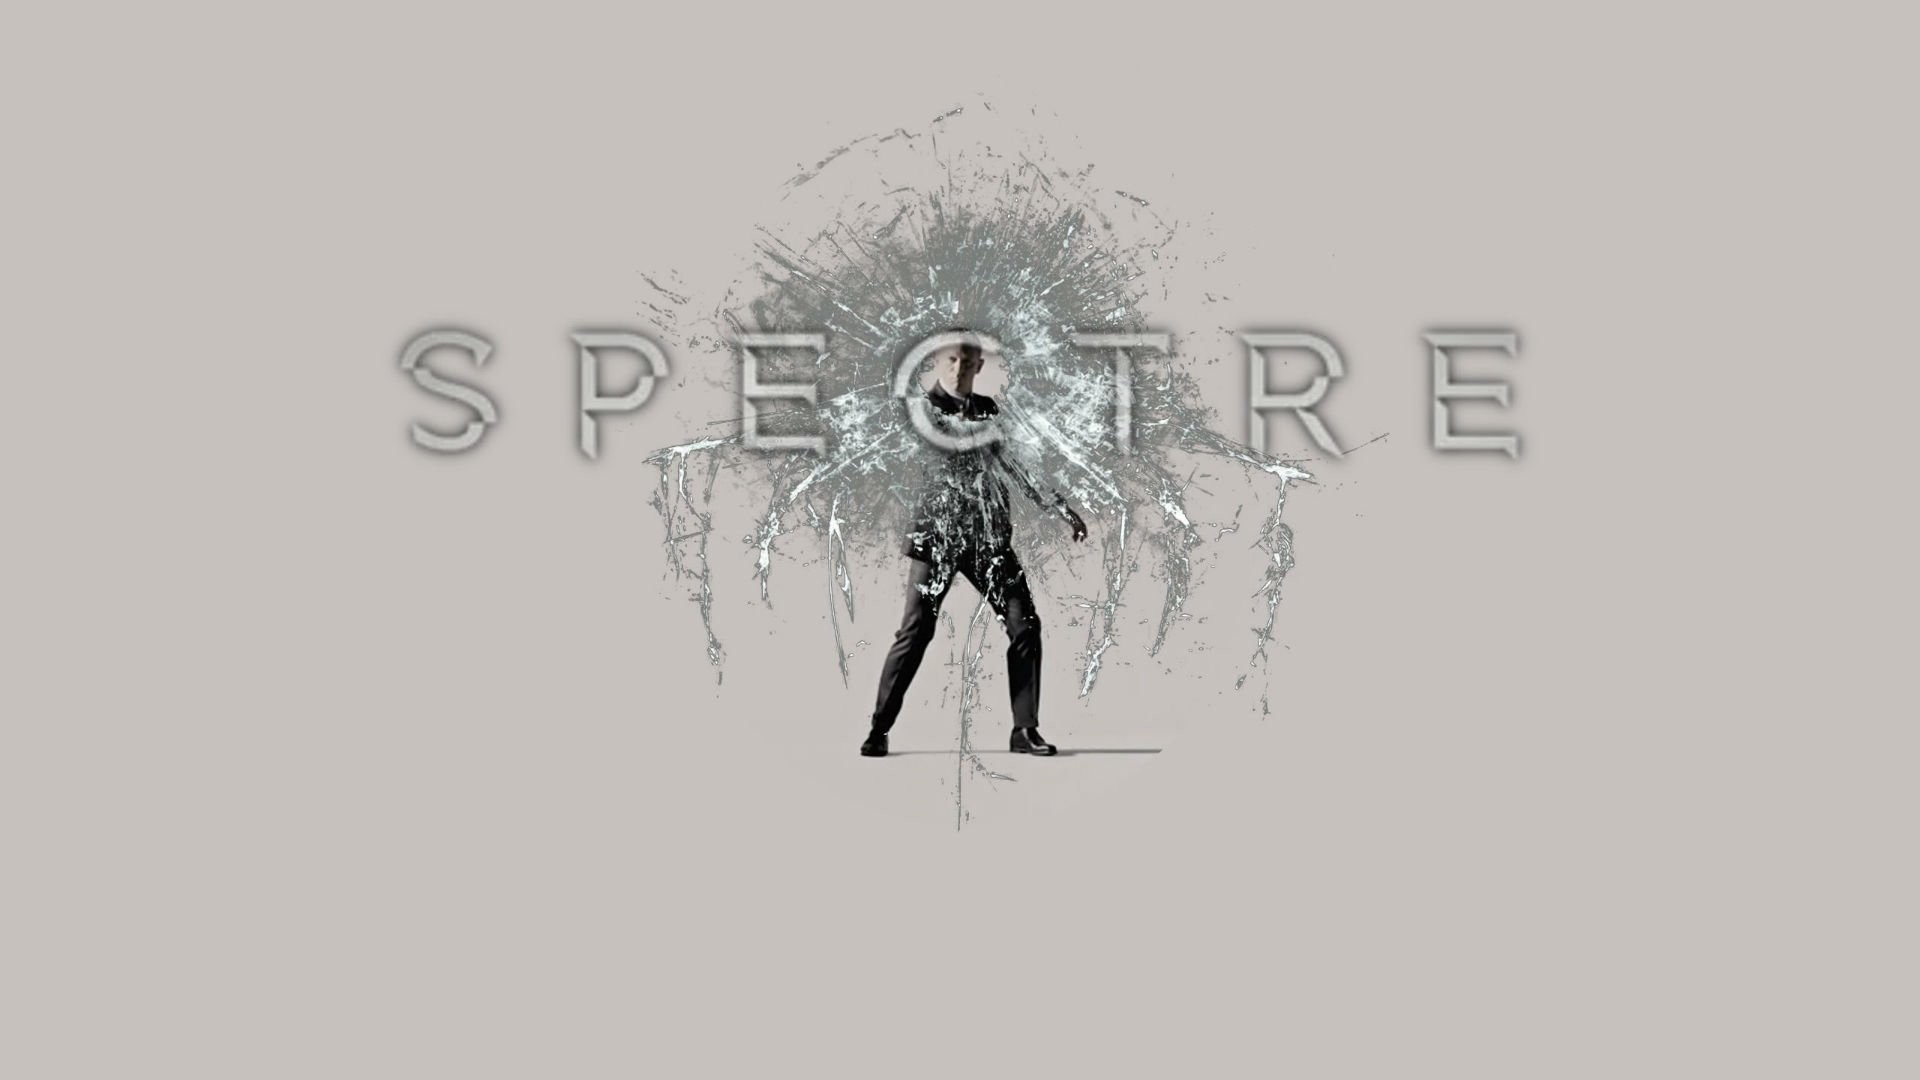 1920x1080 SPECTRE BOND 24 james action spy crime thriller mystery 1spectre 007 poster  wallpaper |  | 577530 | WallpaperUP